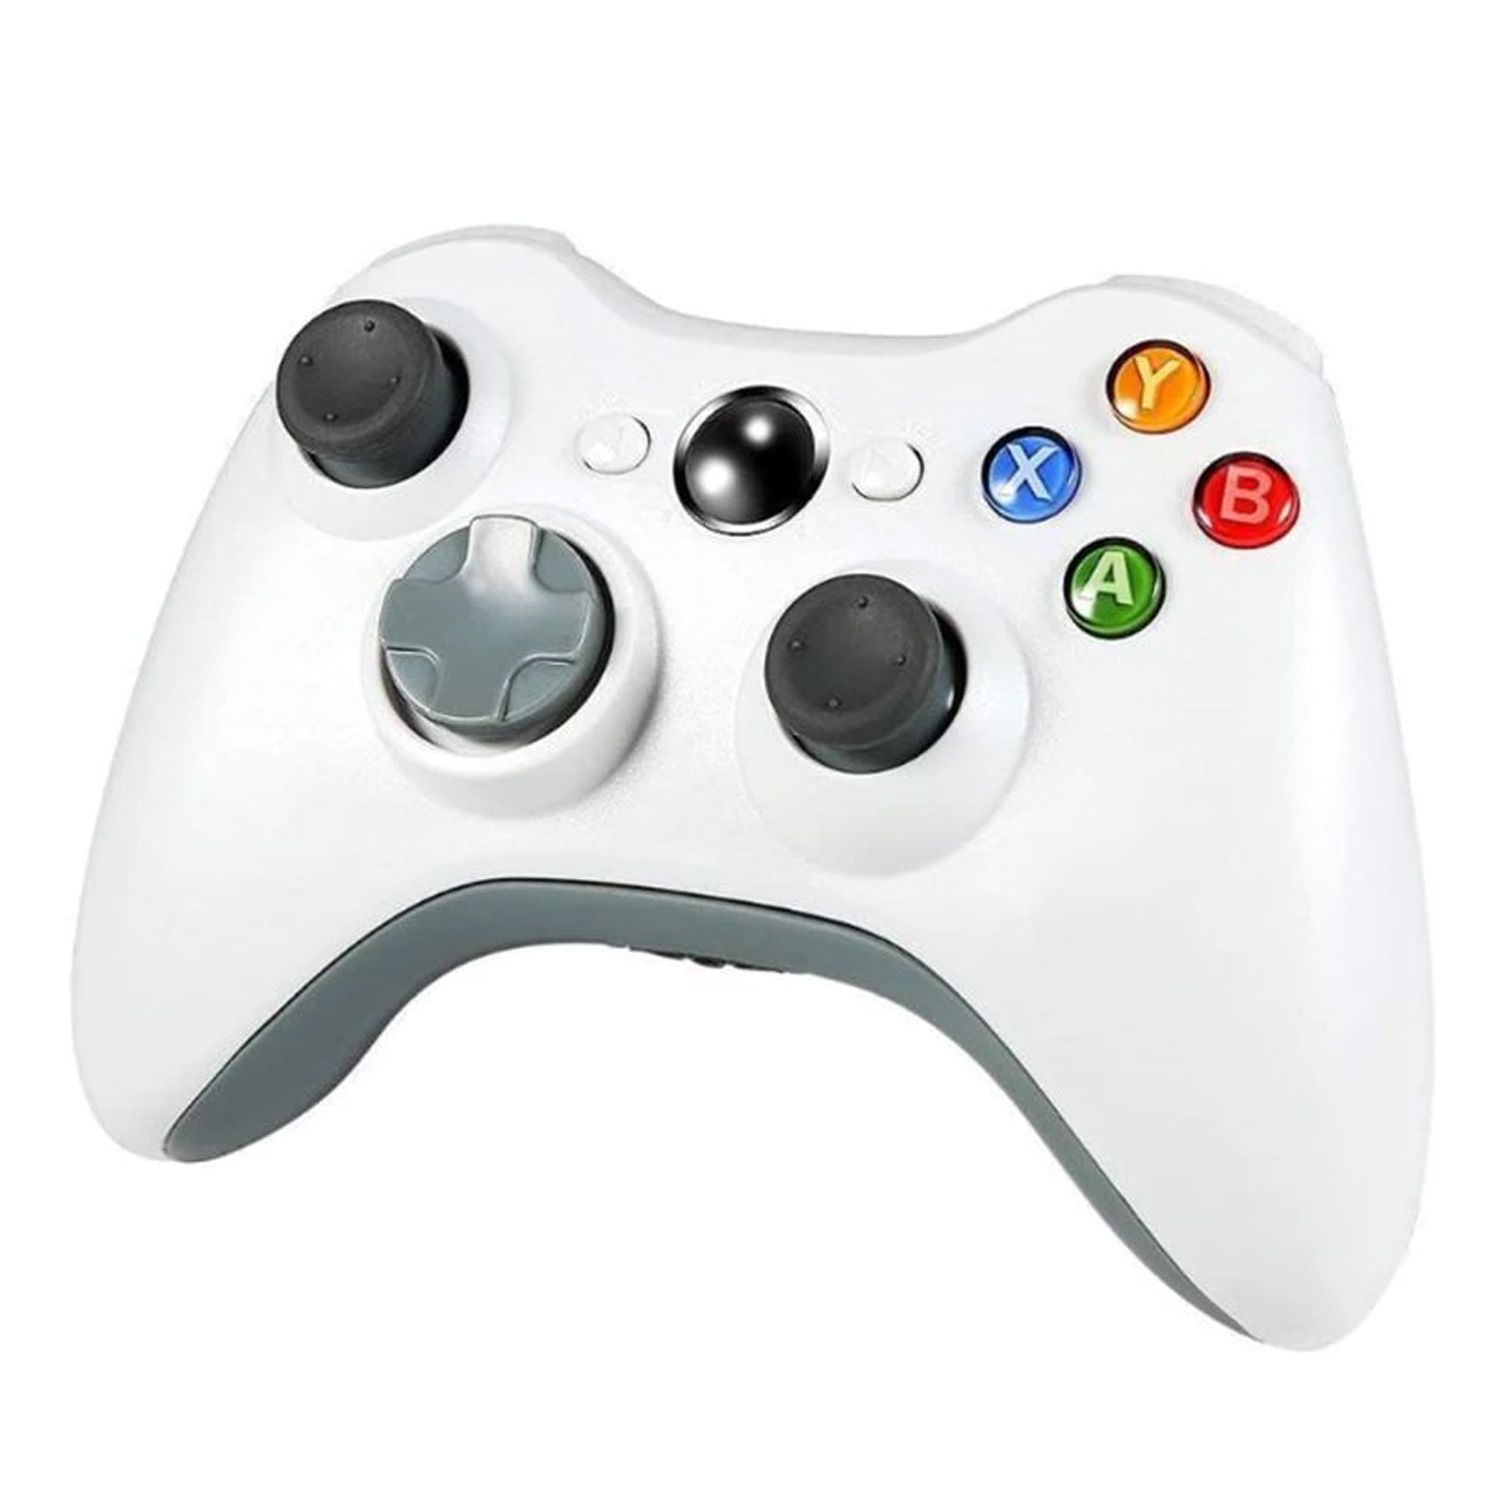 X360 геймпад. Геймпад хбокс 360. Xbox 360 контроллер. Джойстик Xbox 360 беспроводной. Геймпад Xbox 360 проводной белый.